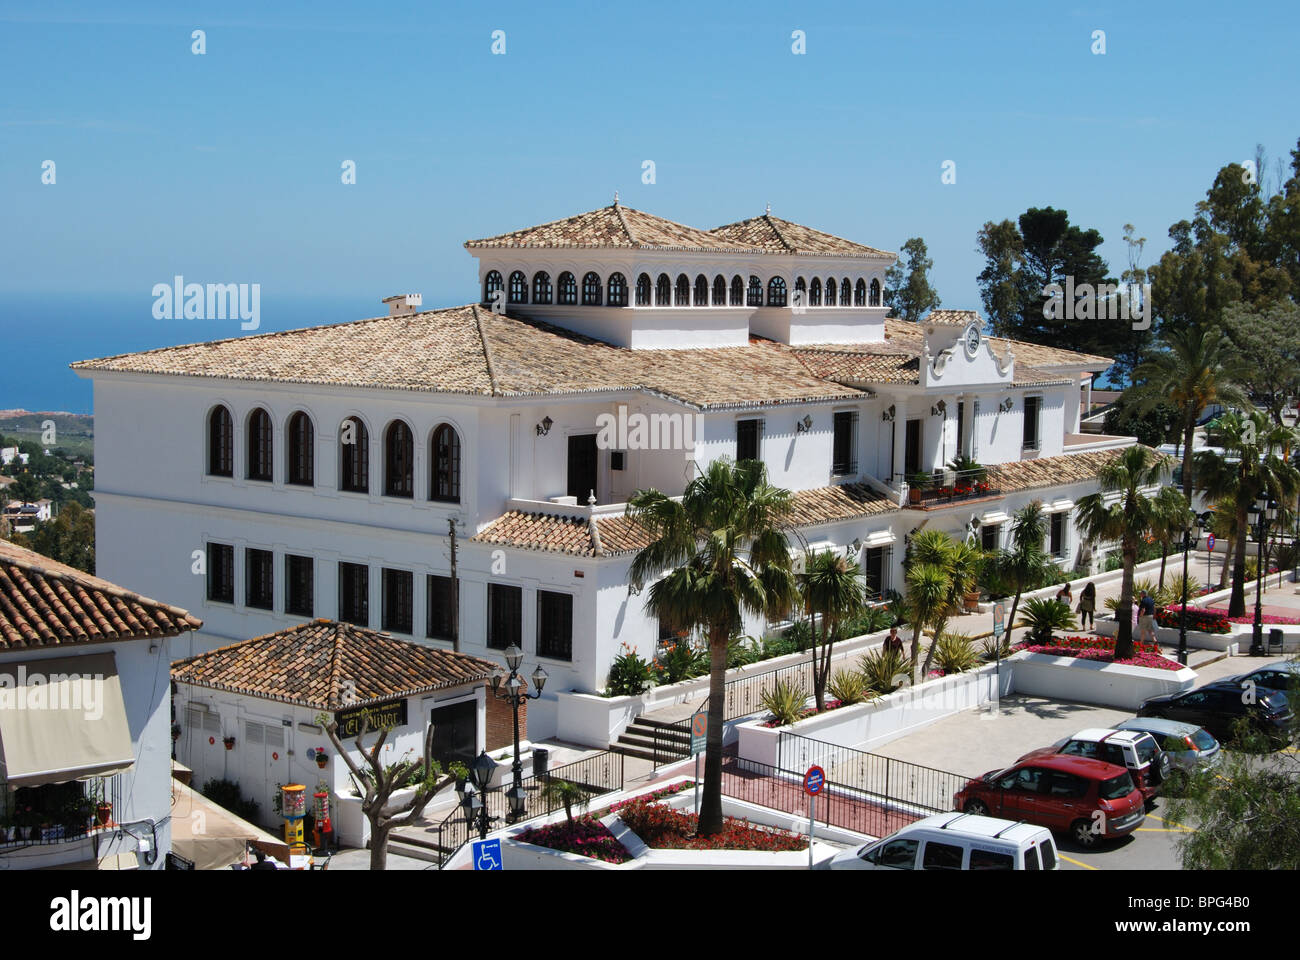 Town hall, Pueblo blanco, Mijas, Costa del Sol, Malaga Province, Andalucia, Spain, Western Europe. Stock Photo